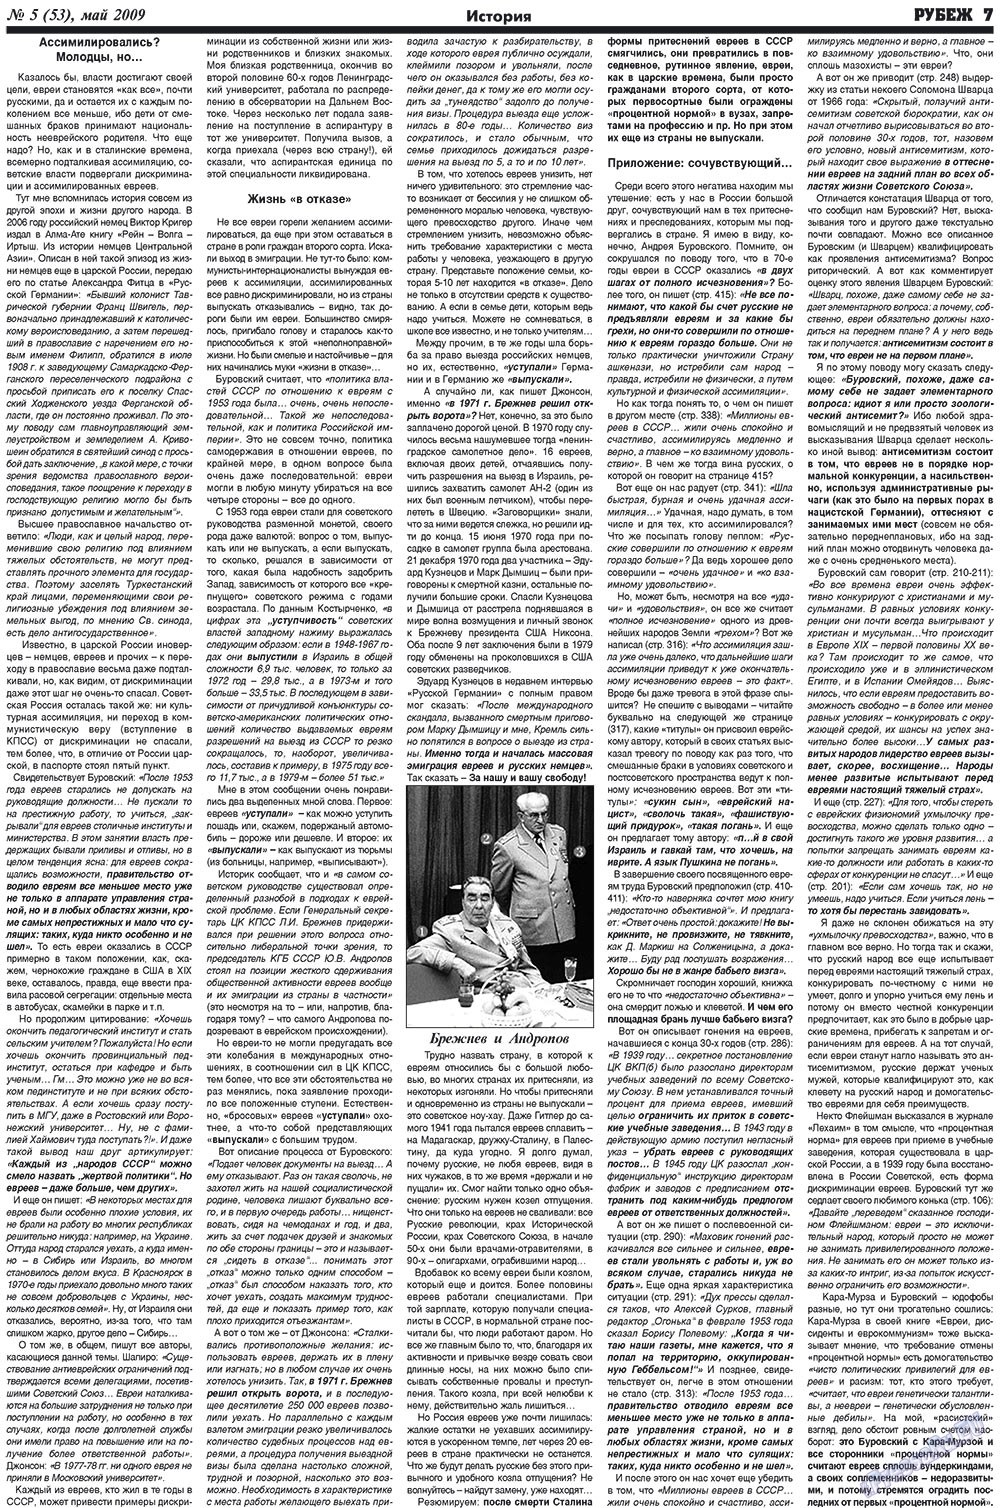 Рубеж, газета. 2009 №5 стр.7